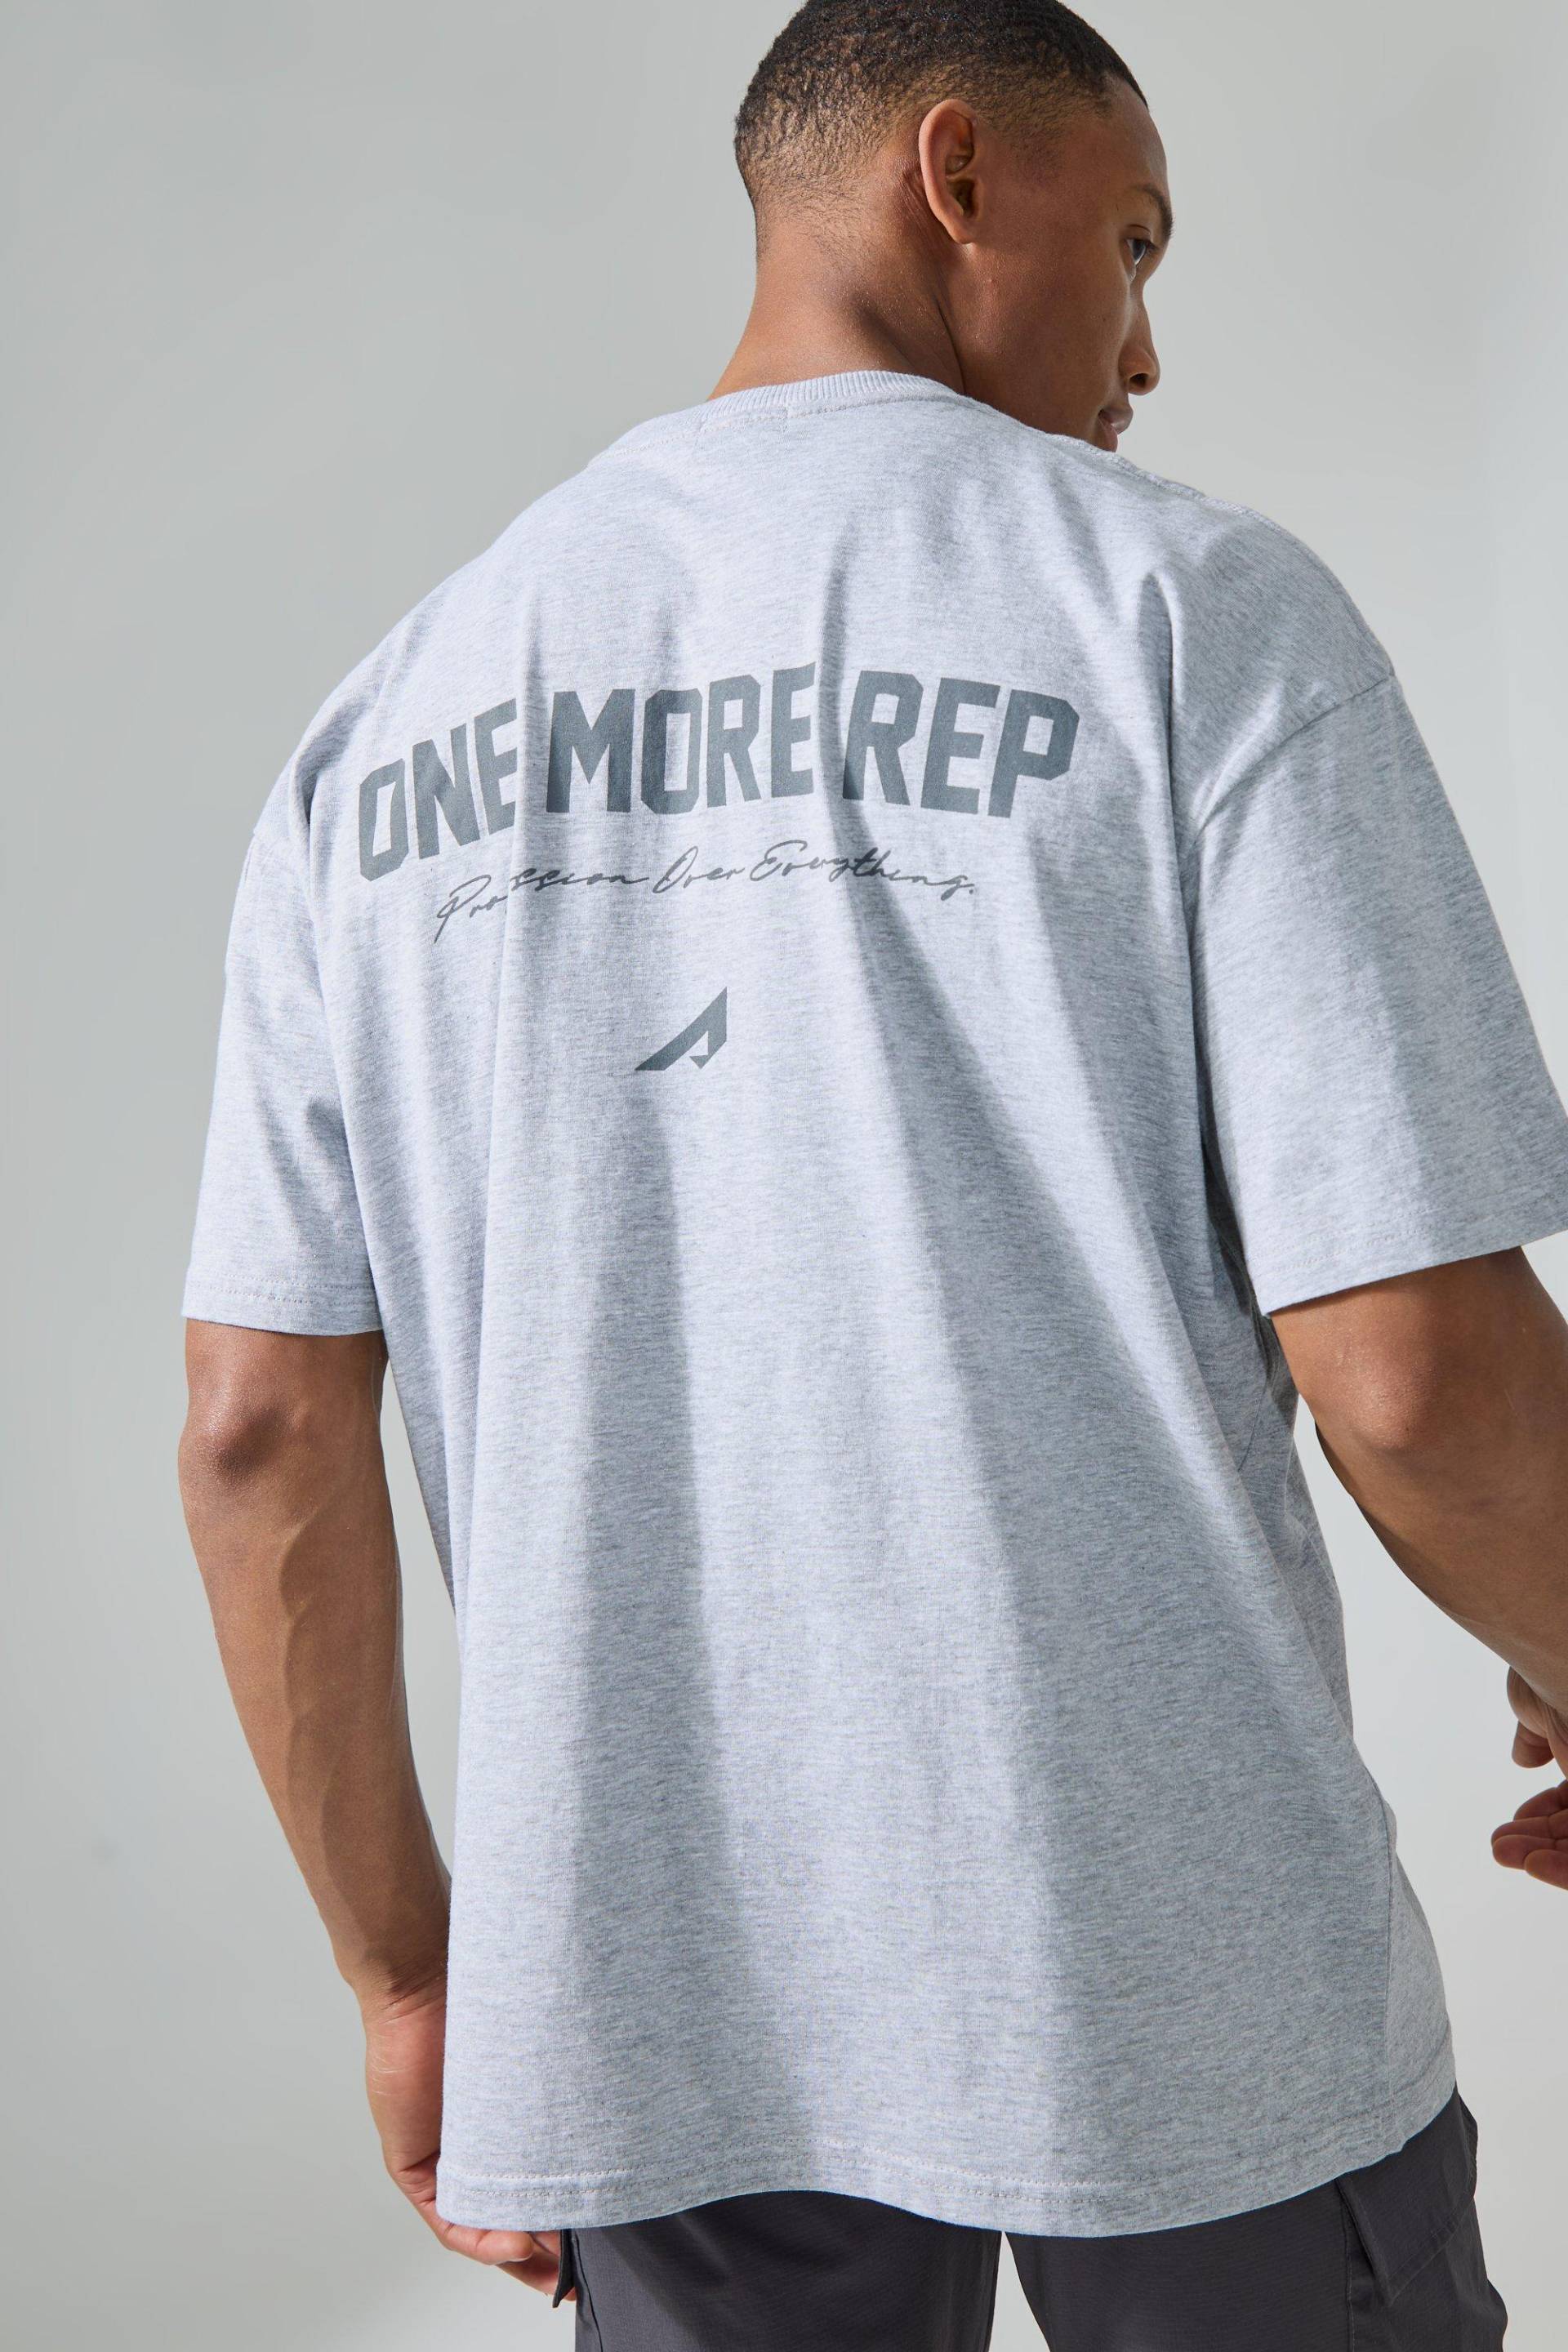 Oversize T-Shirt Mit Man Active One More Rep Print - Grey Marl - M, Grey Marl von boohoo